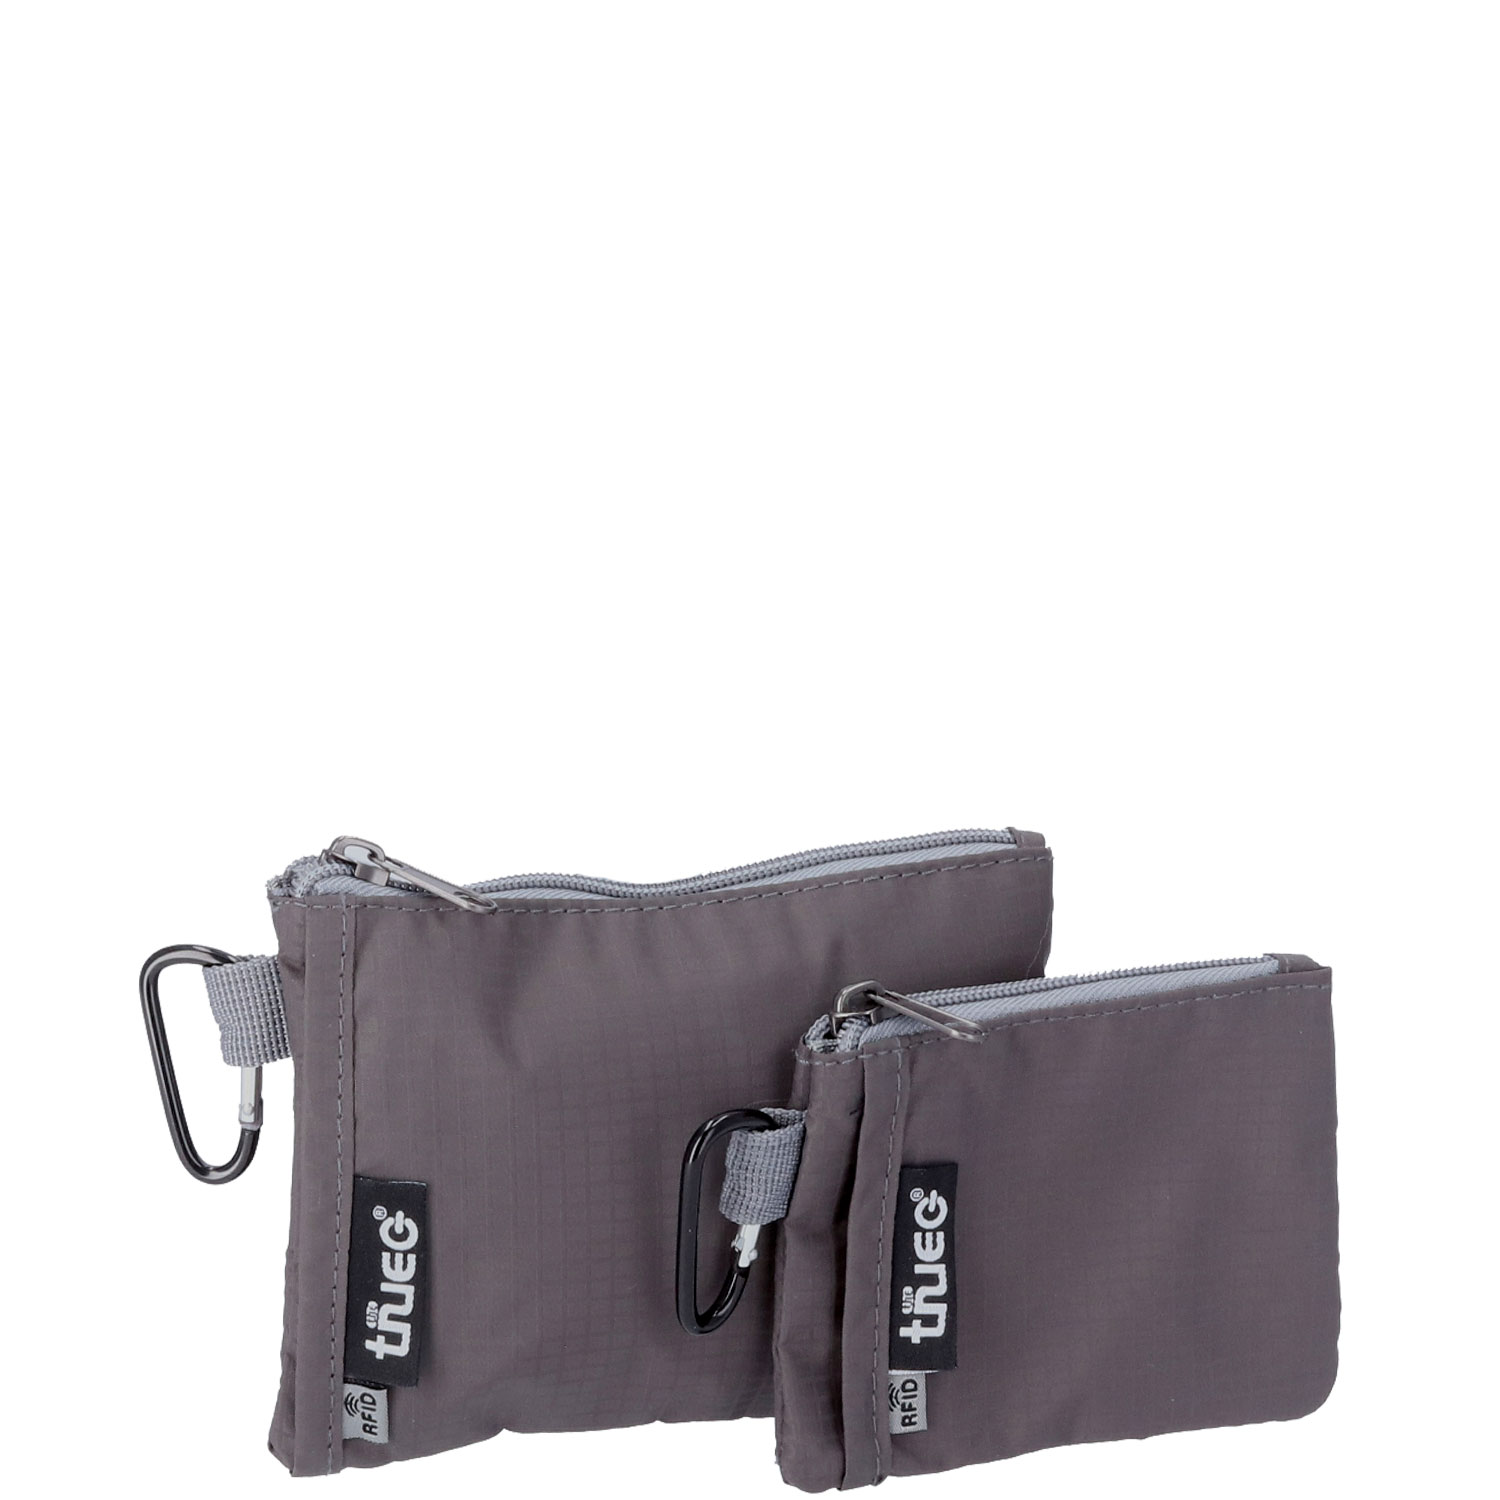 TheTrueC Travel Security Bags Pack of 2 grau